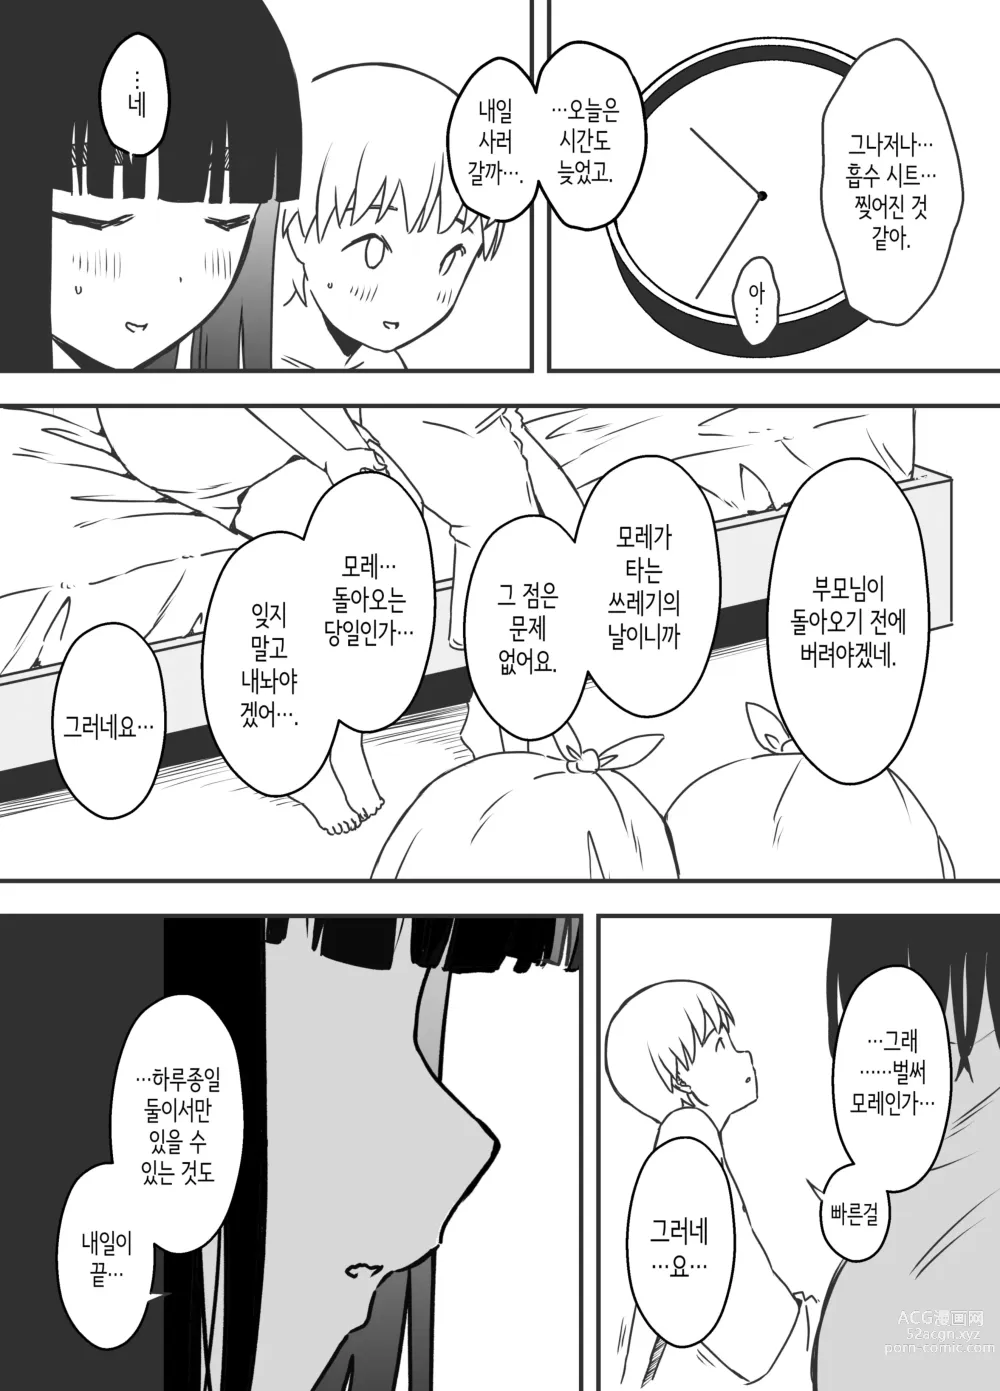 Page 55 of doujinshi 의붓 누나와의 7일간 생활 5